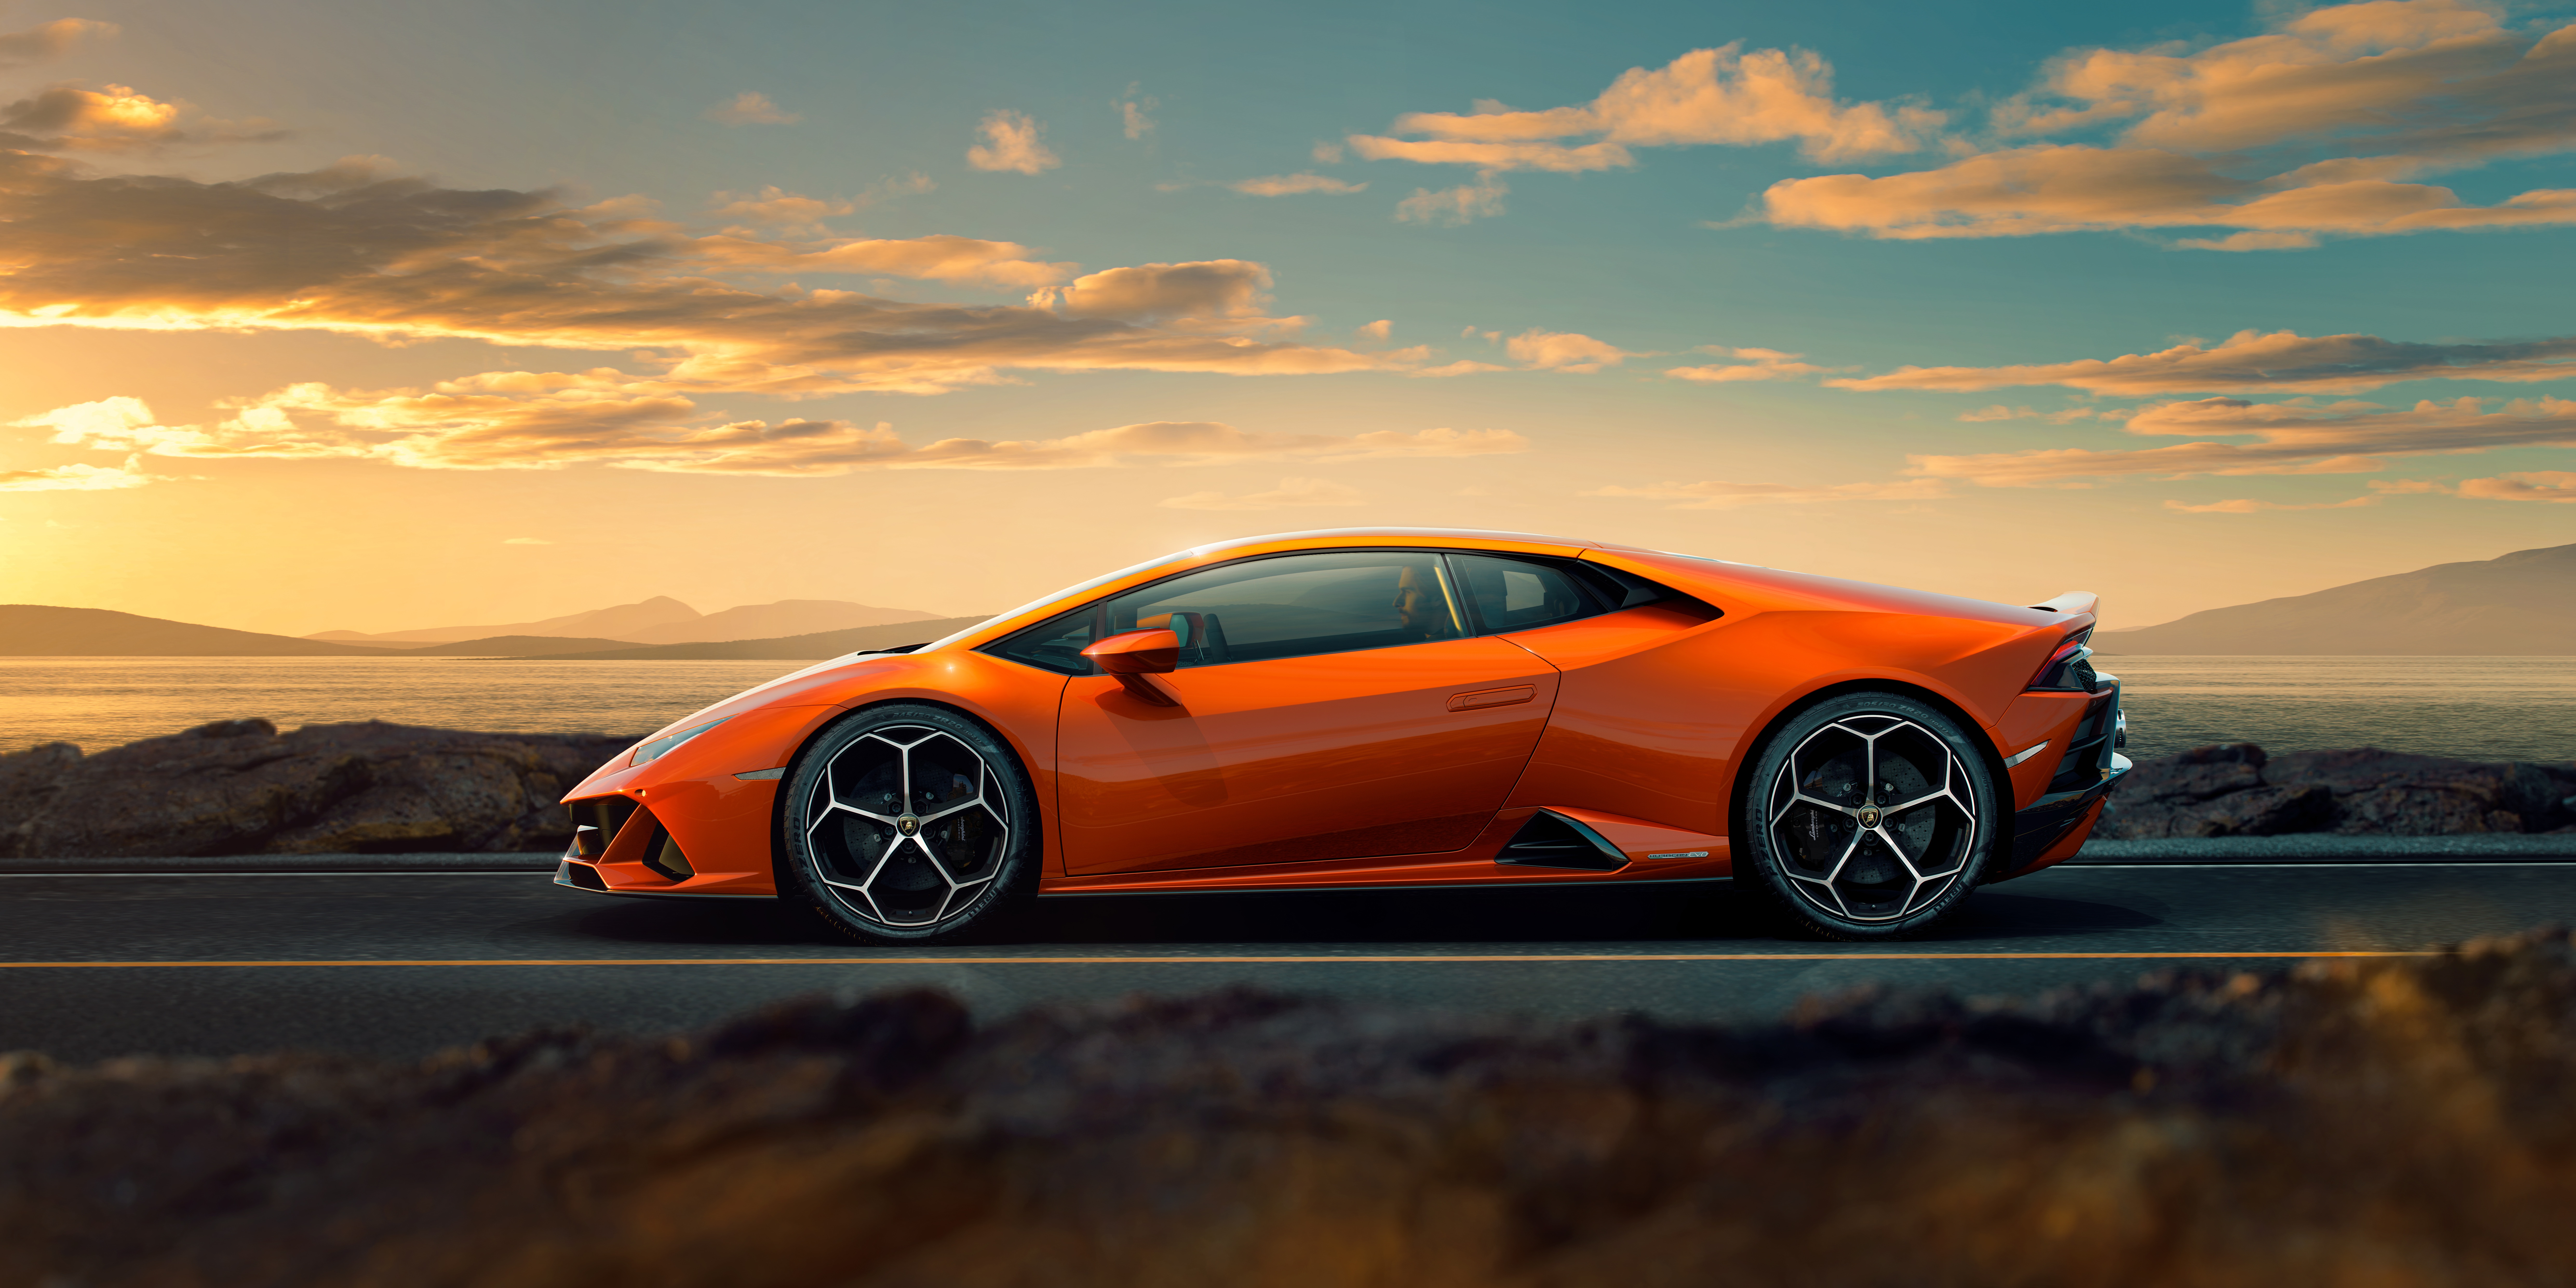 Baixe gratuitamente a imagem Lamborghini, Carro, Super Carro, Veículos, Carro Laranja, Lamborghini Huracán Evo na área de trabalho do seu PC